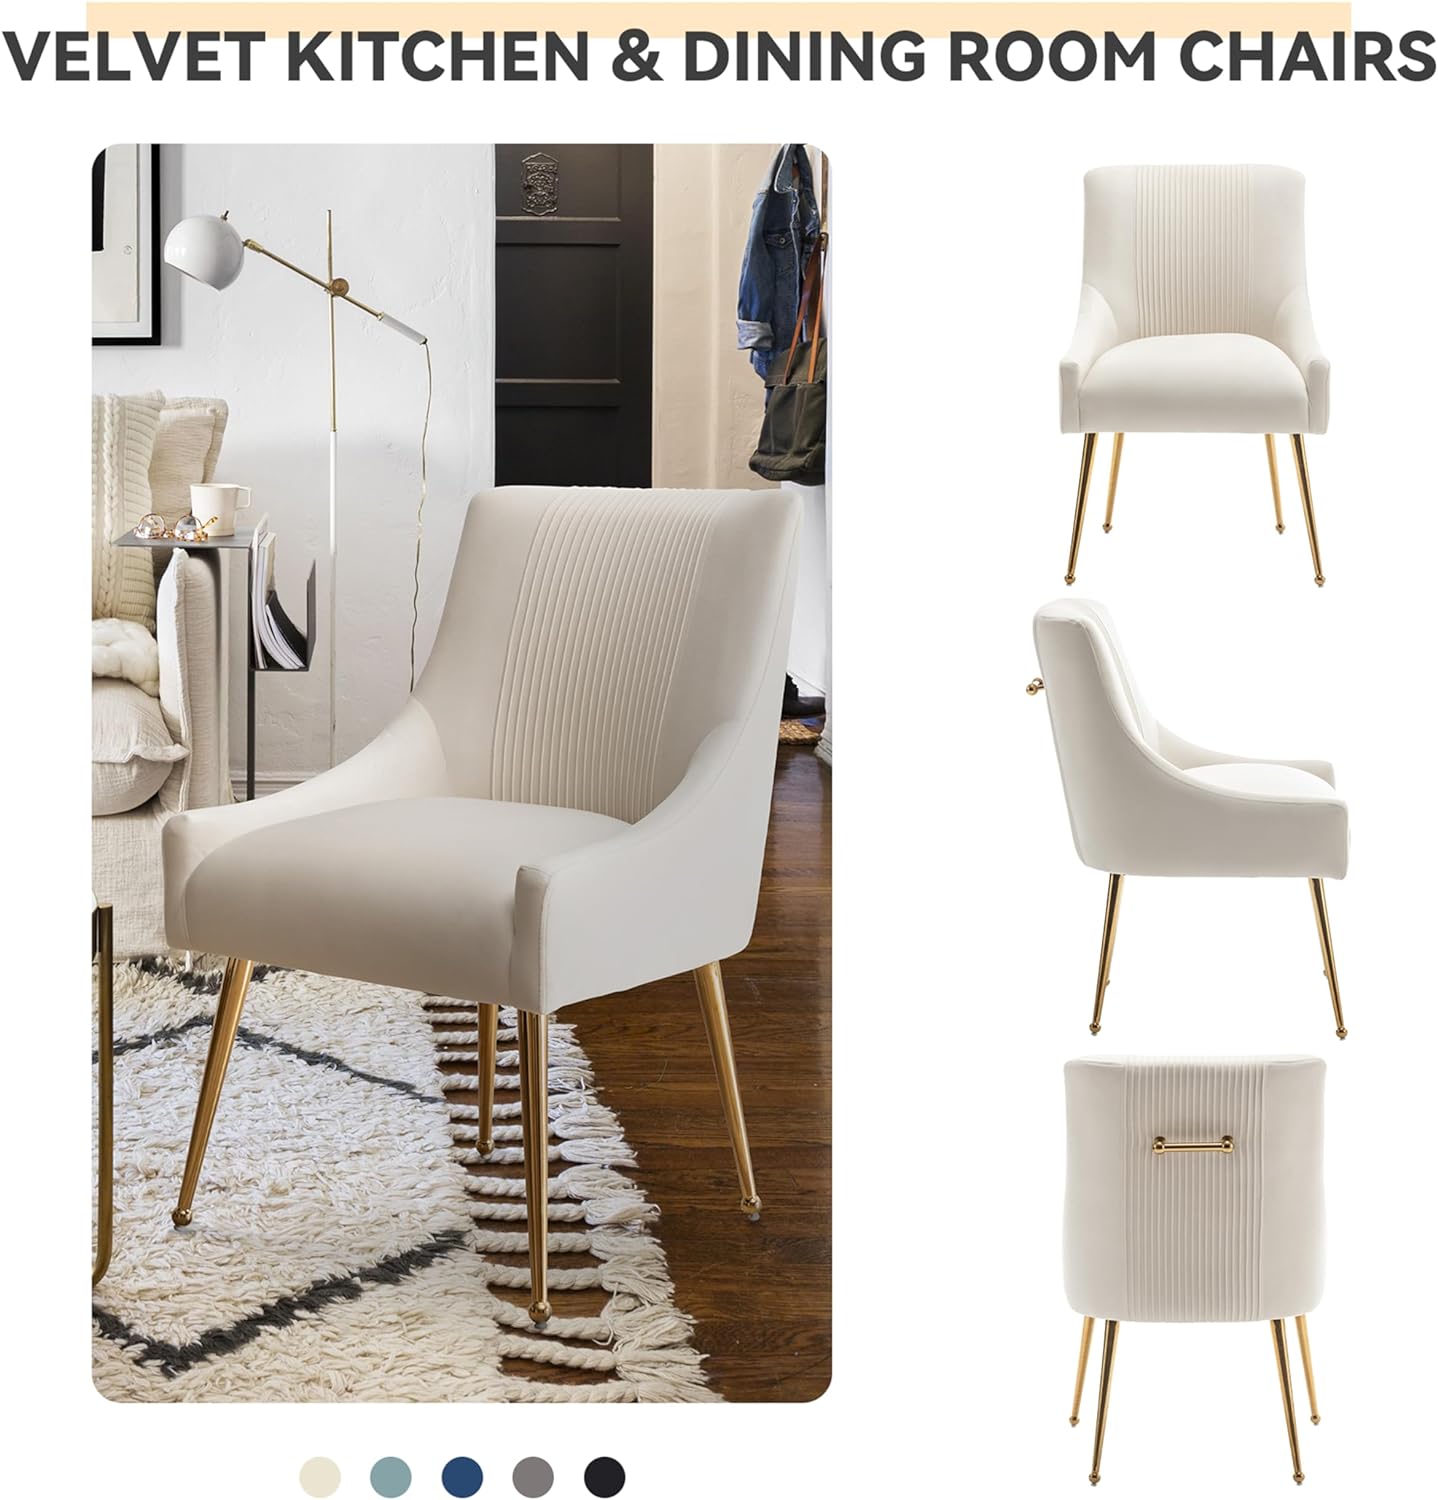 Sillas de comedor, modernas sillas de sala de estar, sillas de comedor